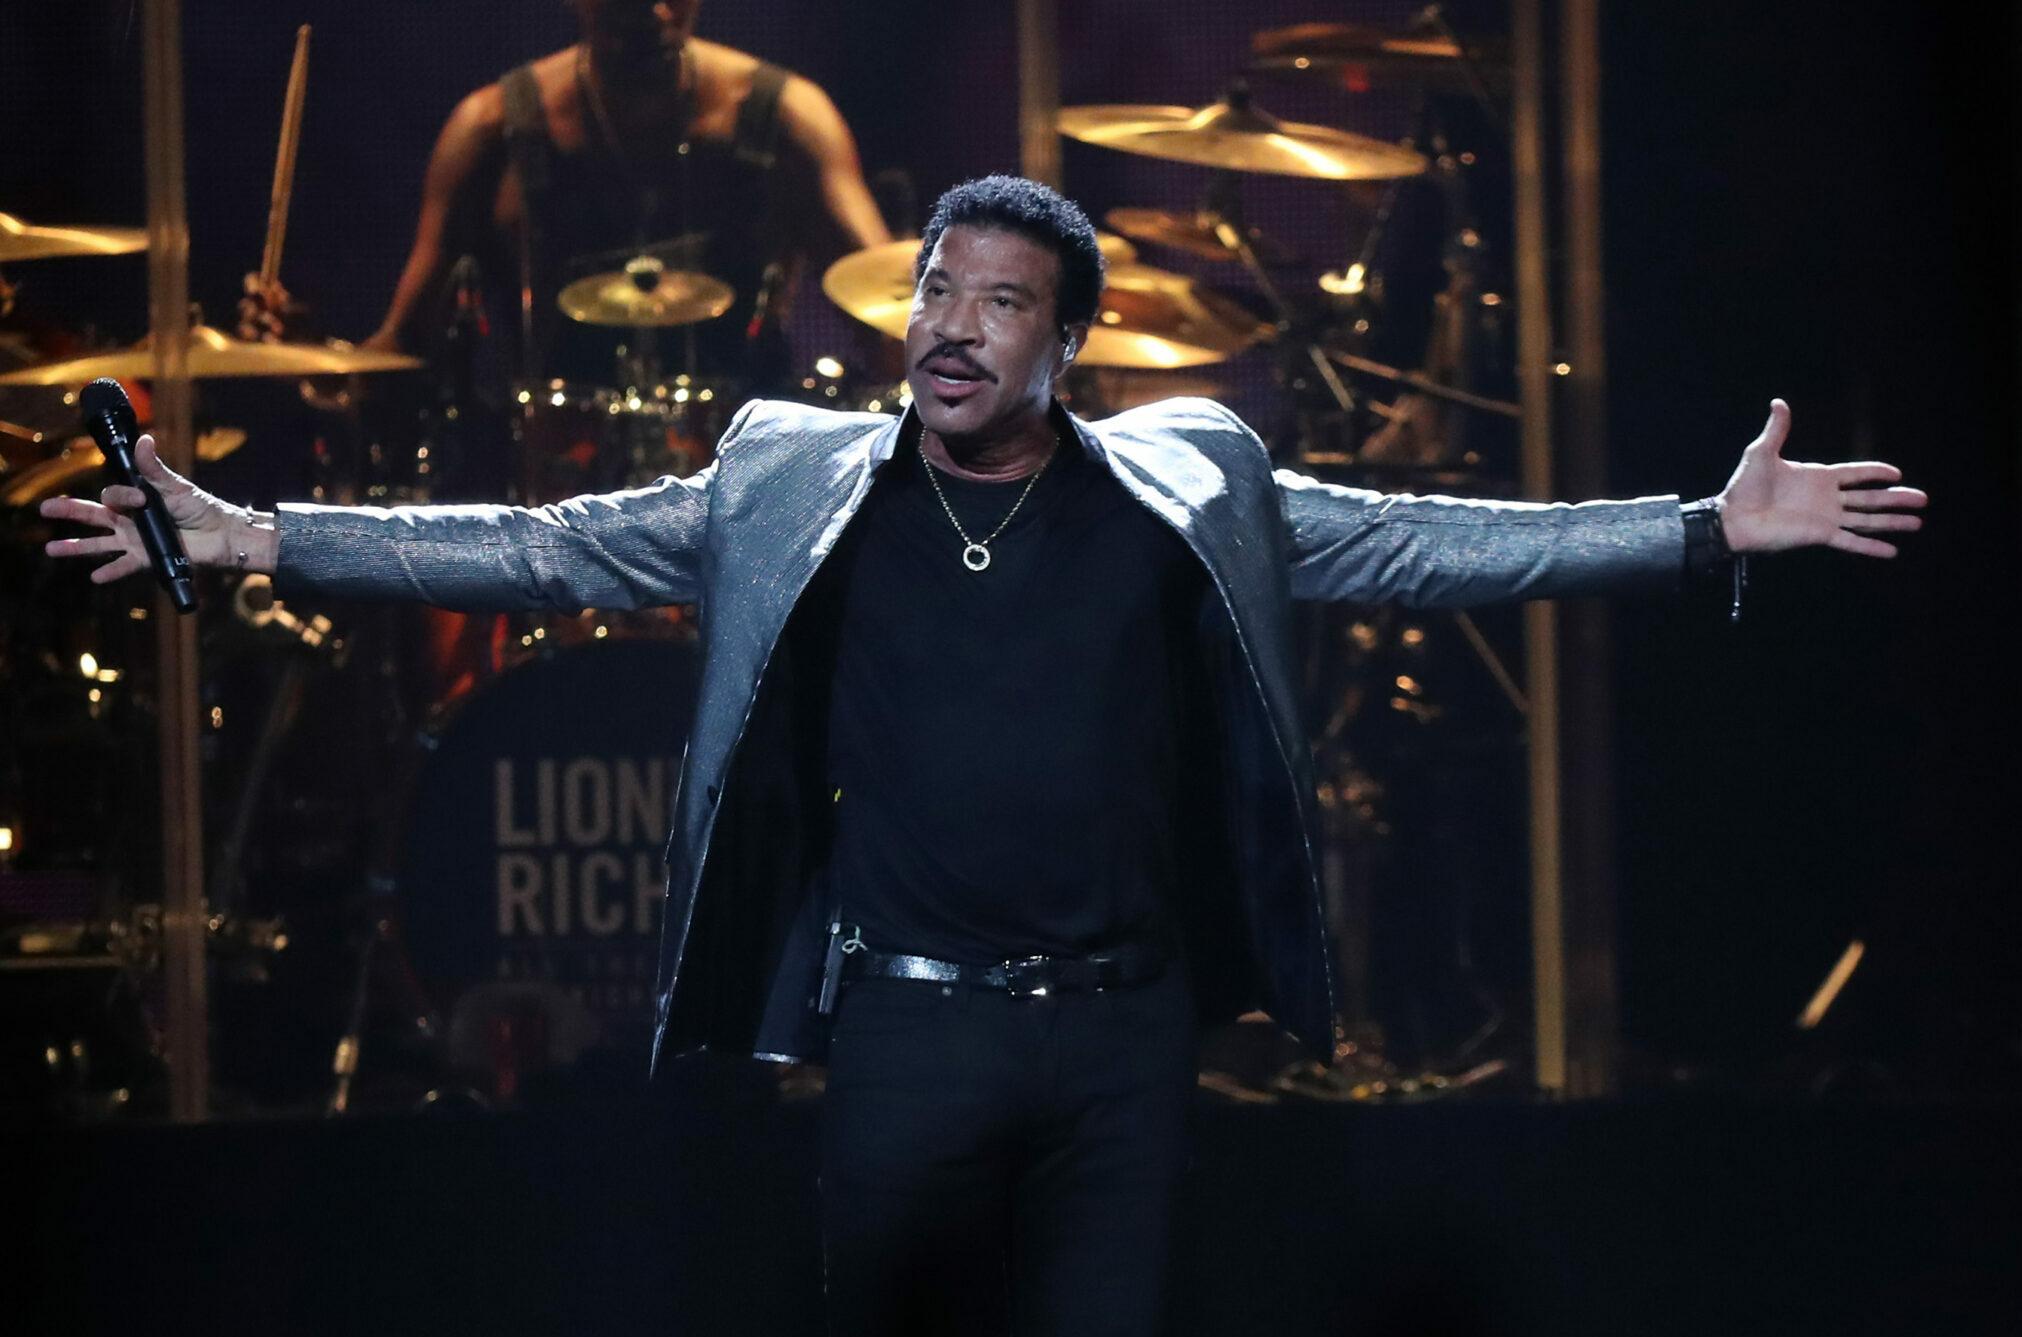 Lionel Richie performs at the United Center in Chicago on Aug. 26, 2017. (Nuccio DiNuzzo/Chicago Tribune/TNS)